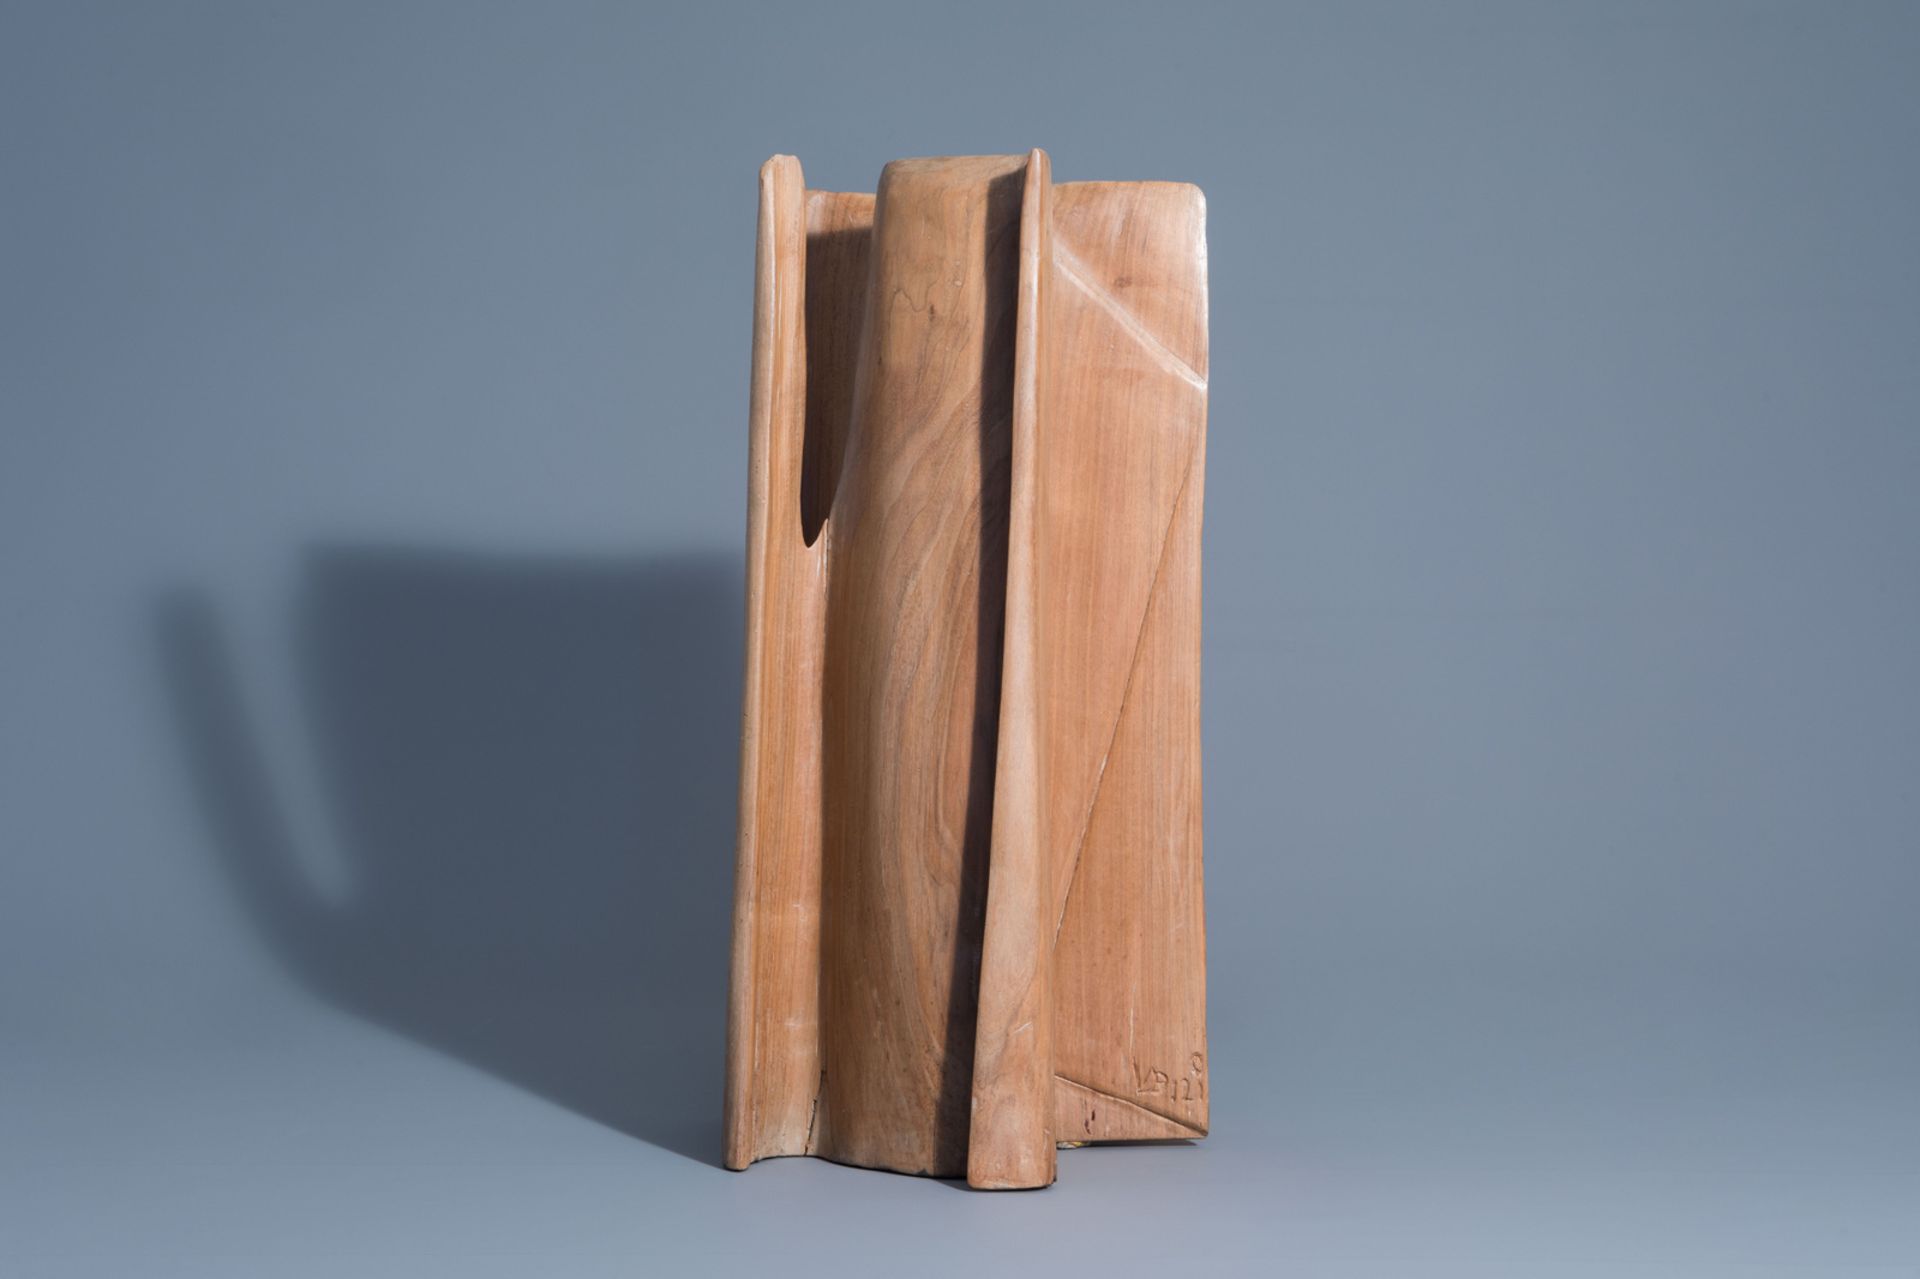 Monogrammed VDB (?): Untitled, wood sculpture - Image 4 of 8